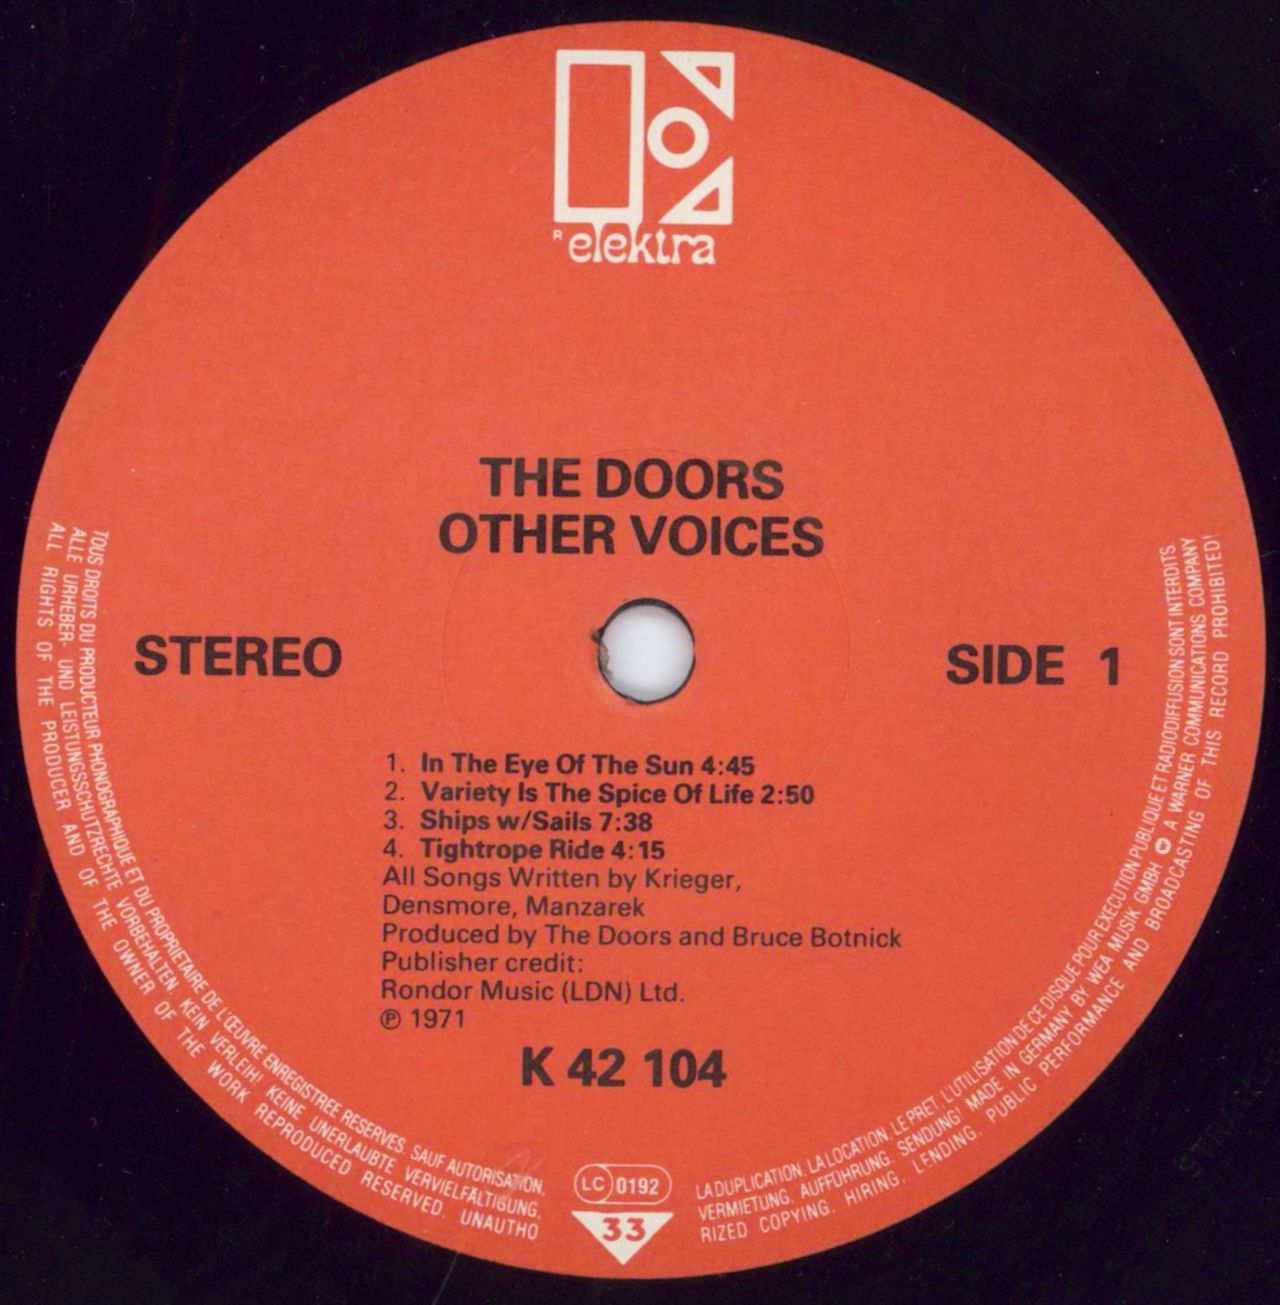 The Doors Other Voices - Red Label German Vinyl LP